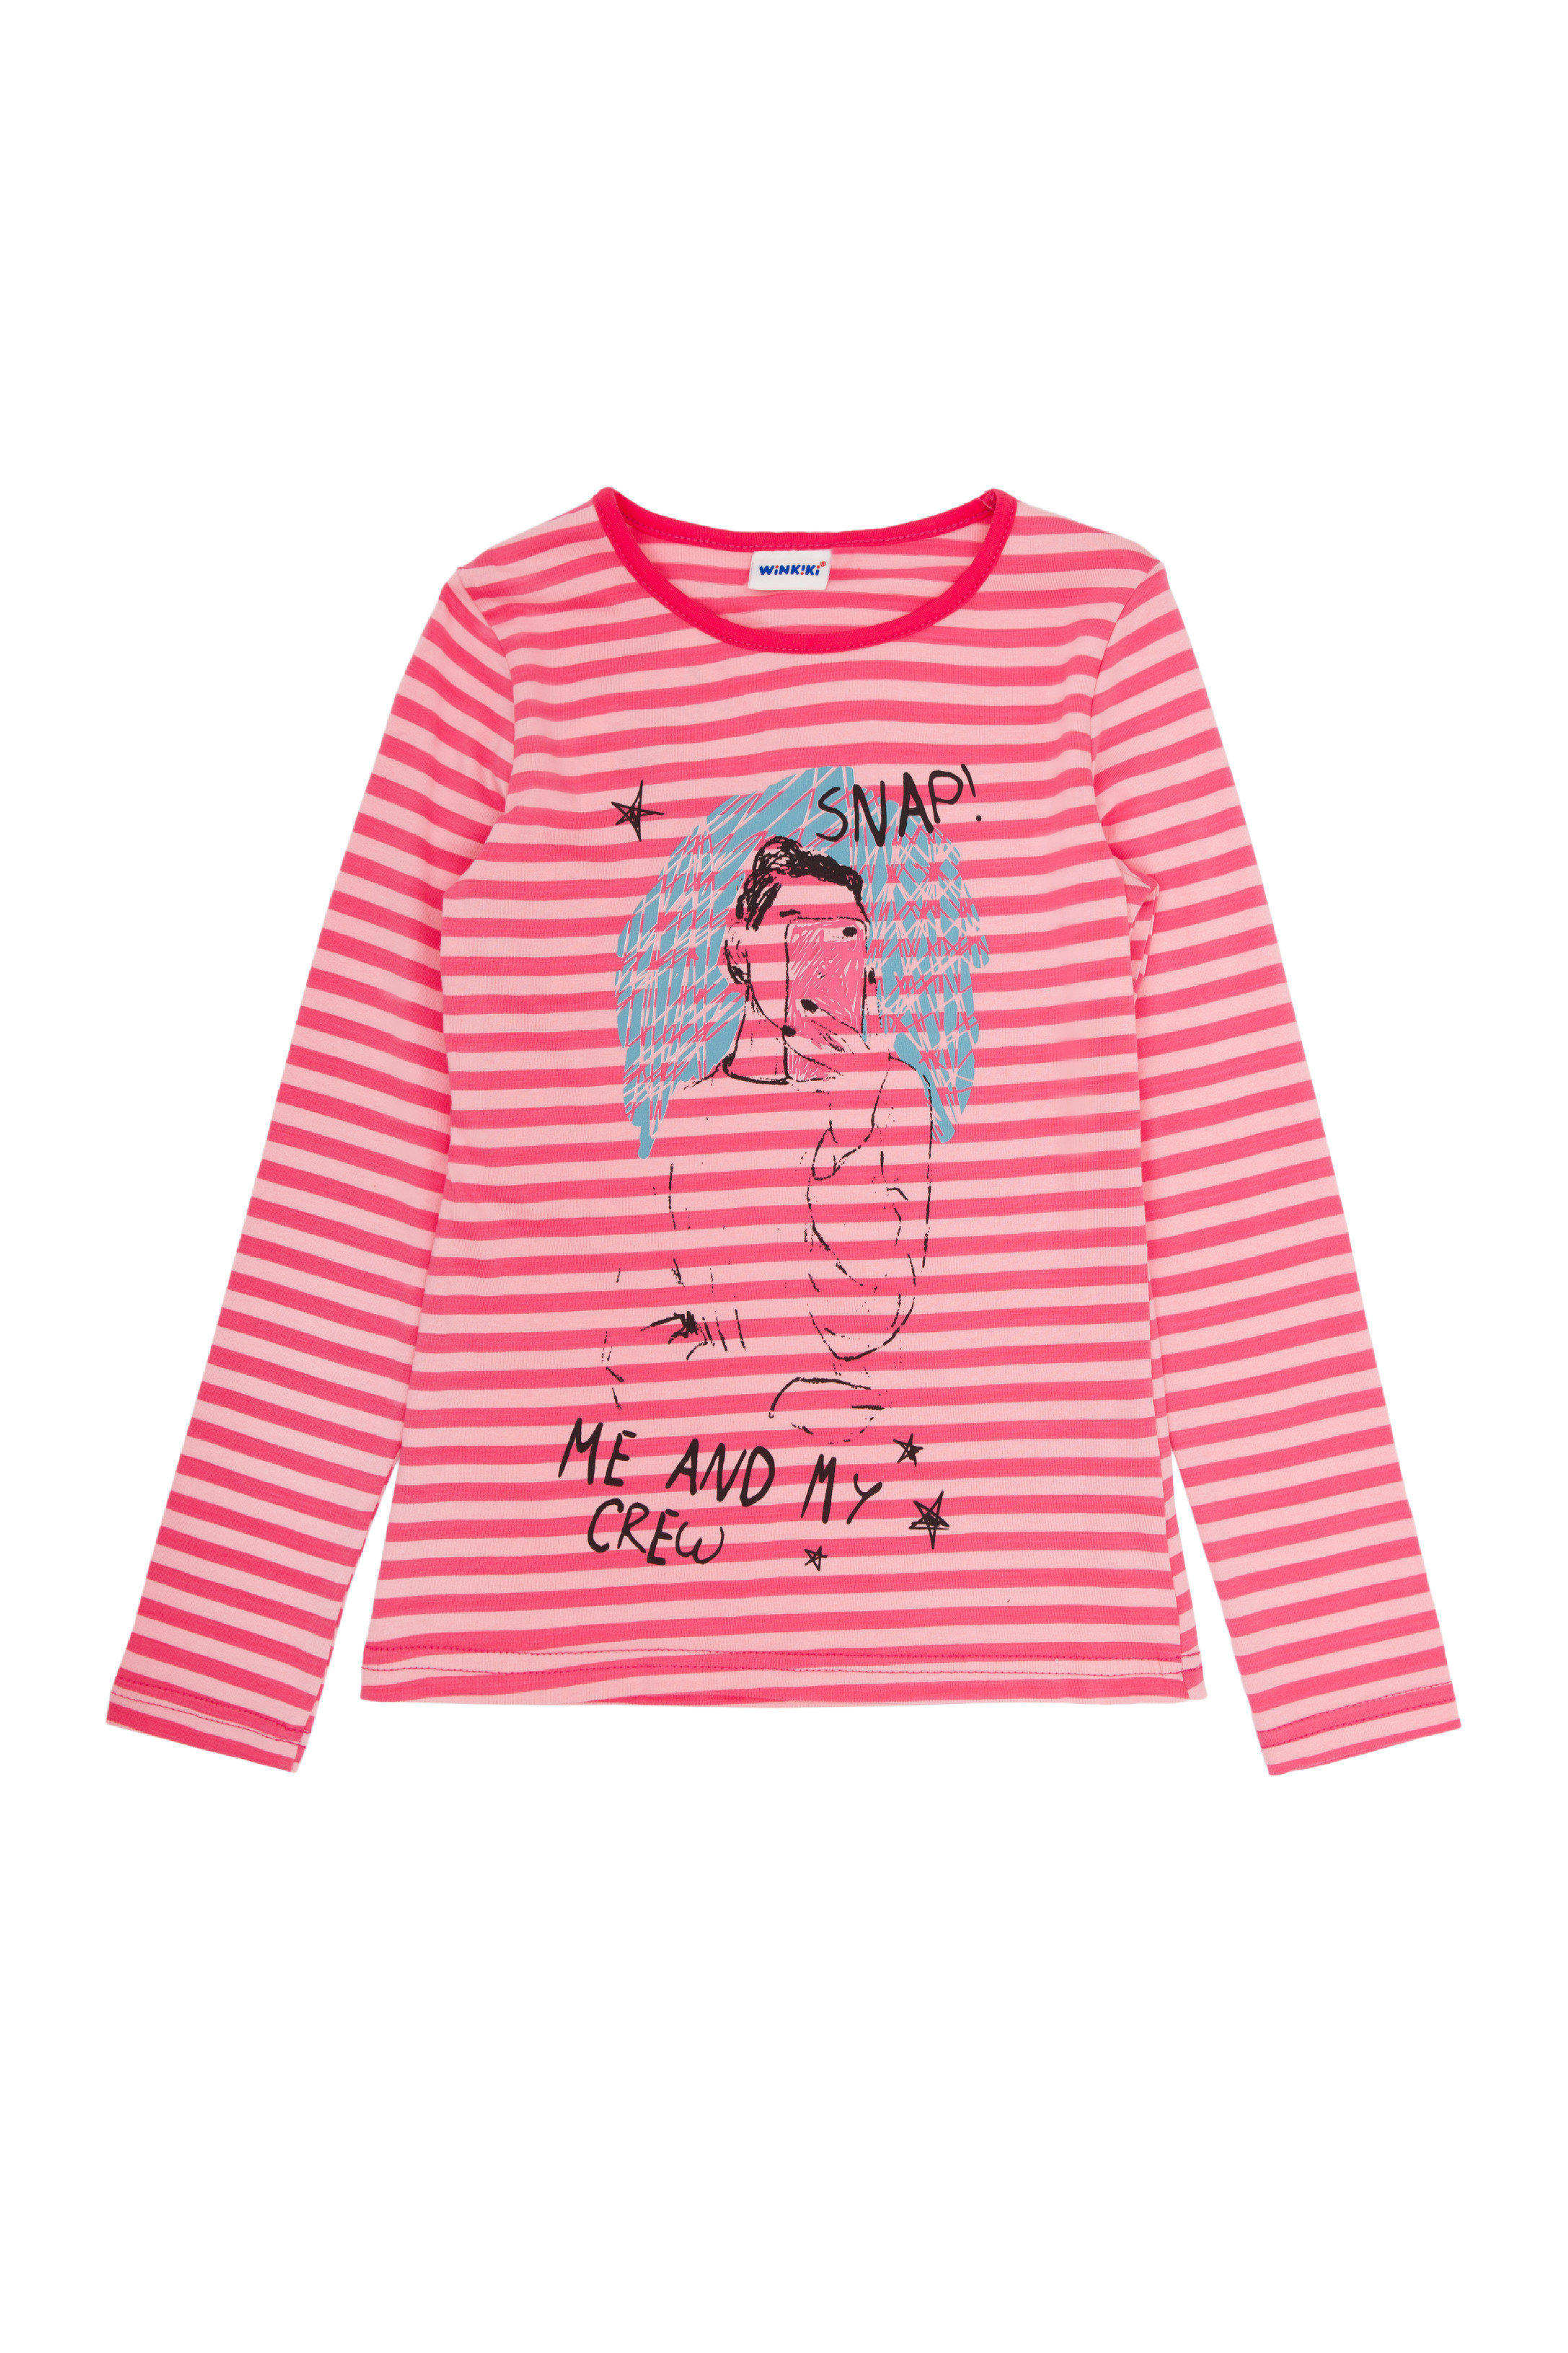 Dívčí triko - Winkiki WJG 01736, růžová Barva: Růžová, Velikost: 146